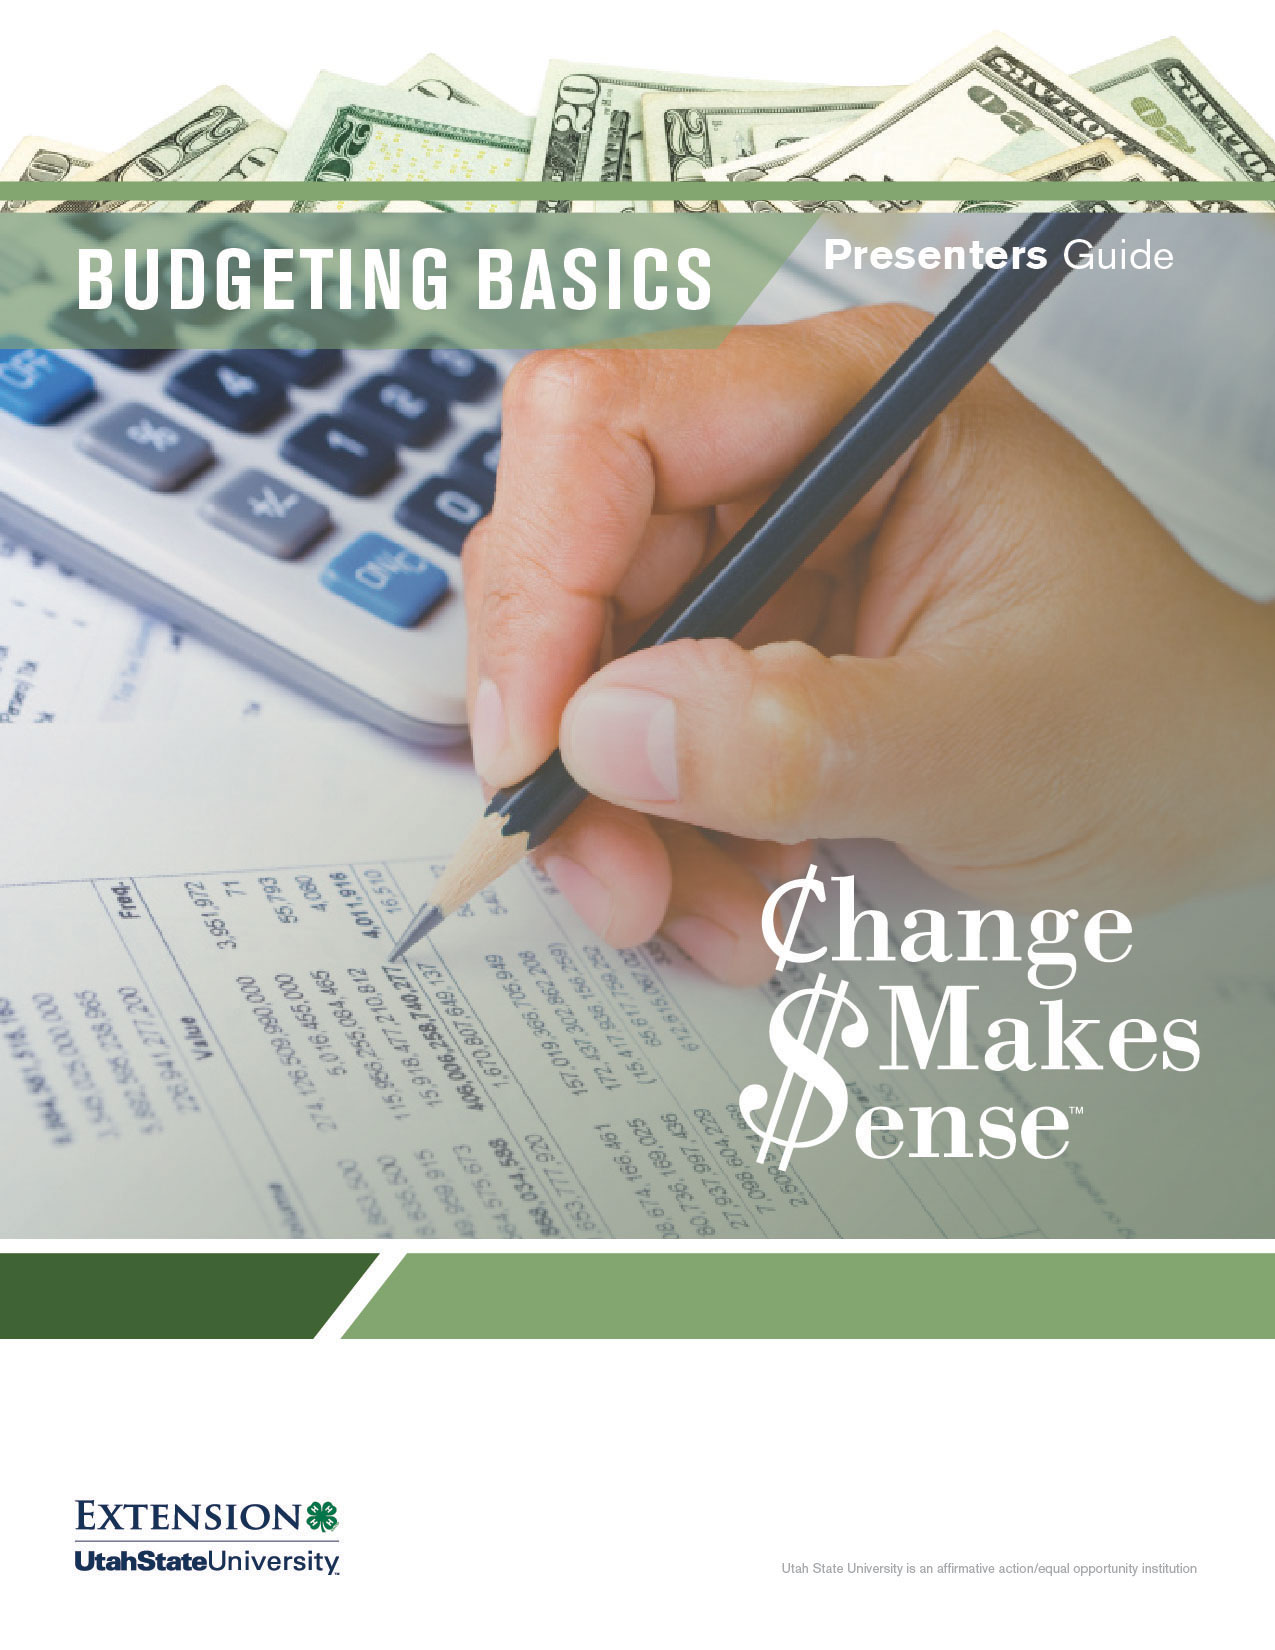 Budgeting Basics Guide